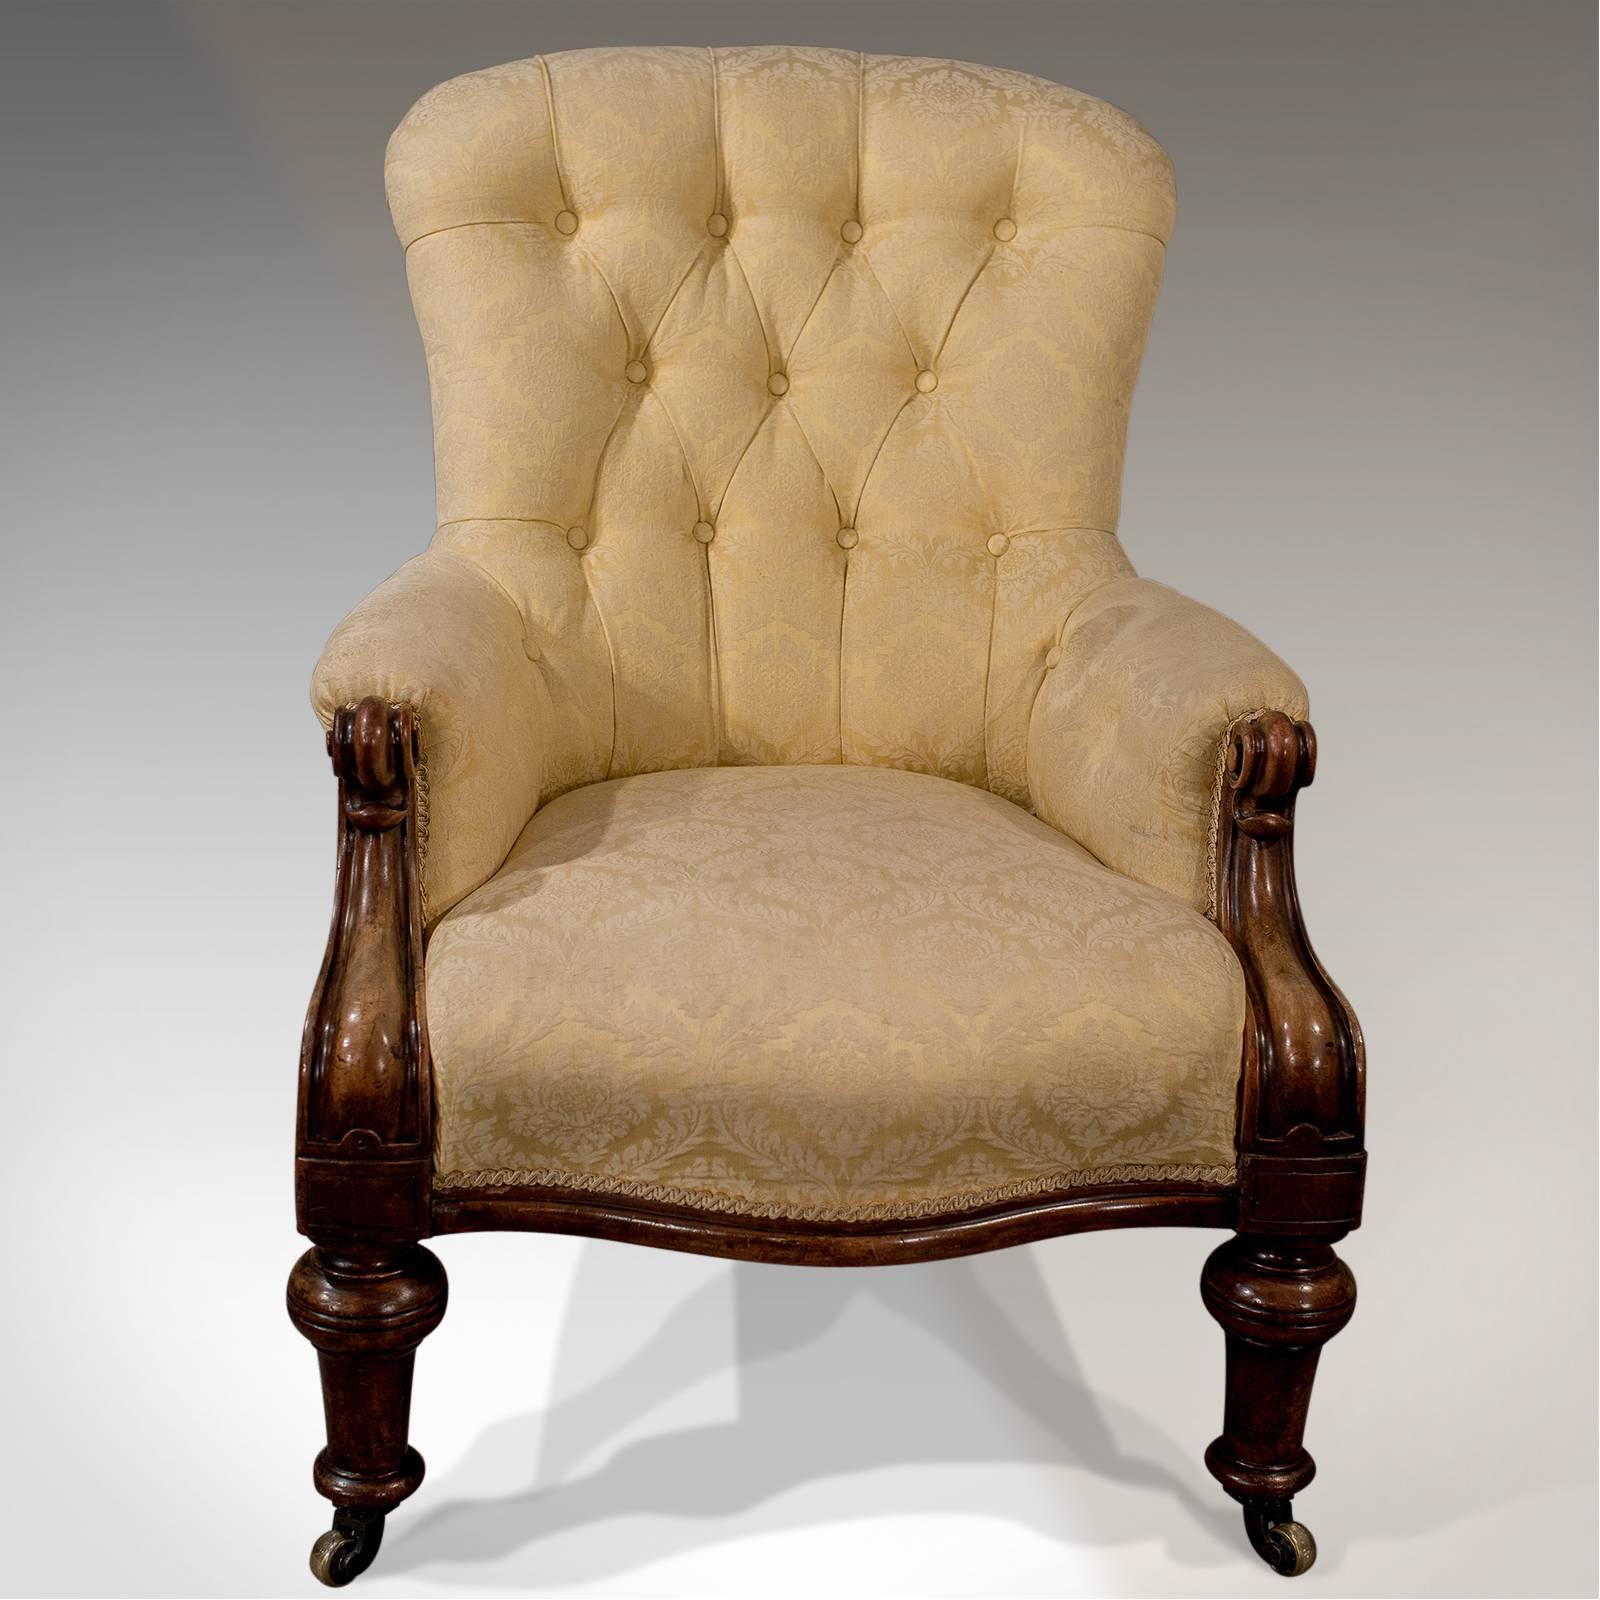 Great Britain (UK) Walnut Armchair Gentlemen's Club Lounge Chair English Victorian, circa 1860